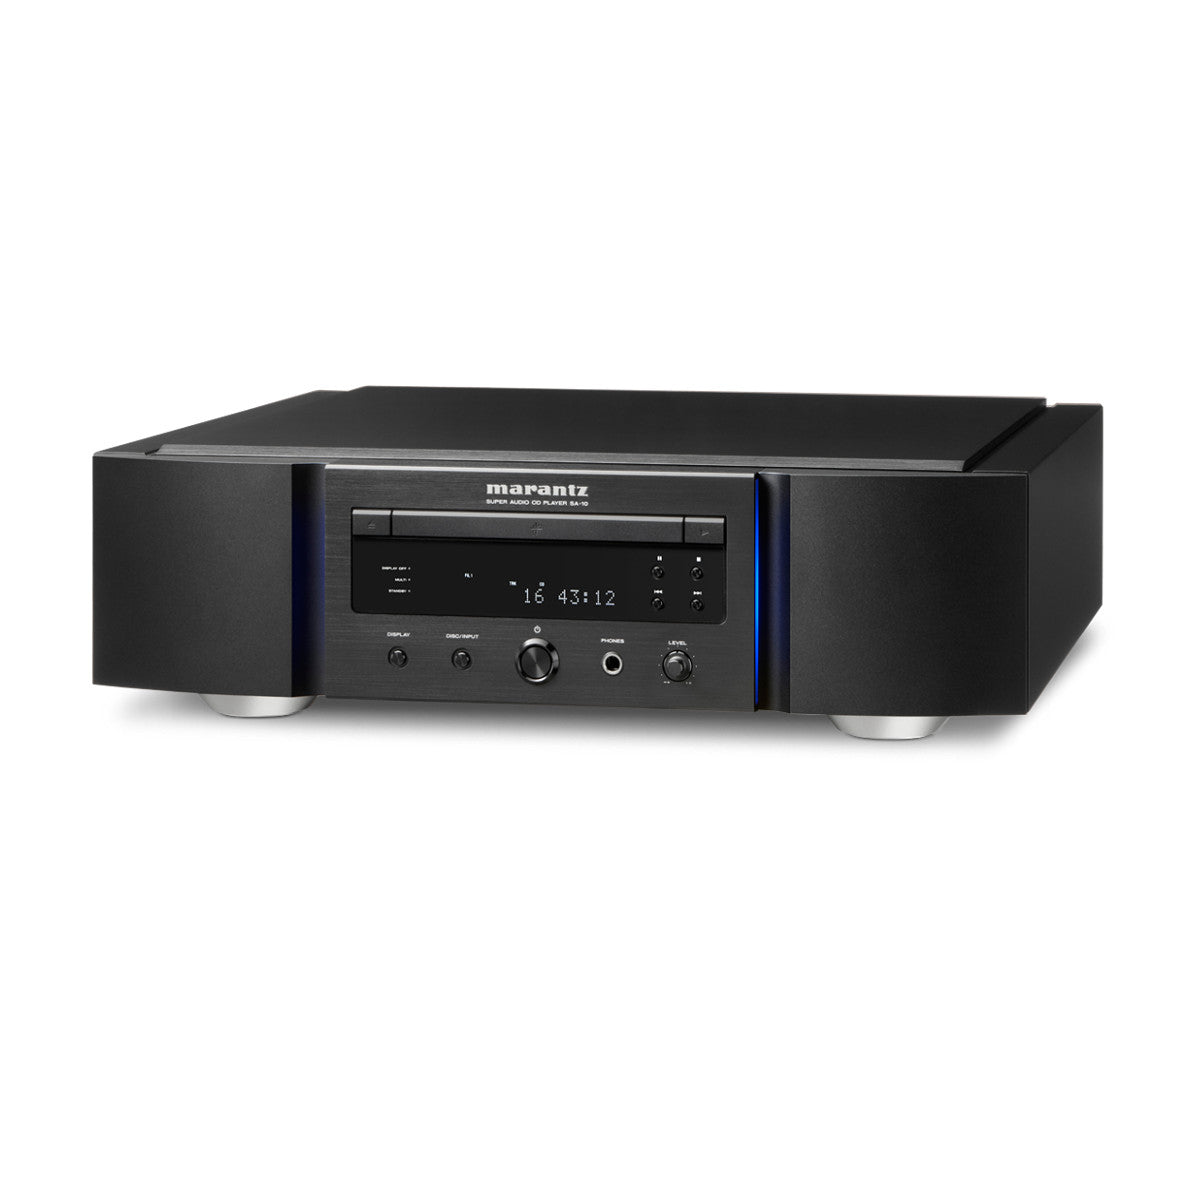 Marantz SA-10 Super Audio CD player with USB DAC and Digital Inputs - Ooberpad